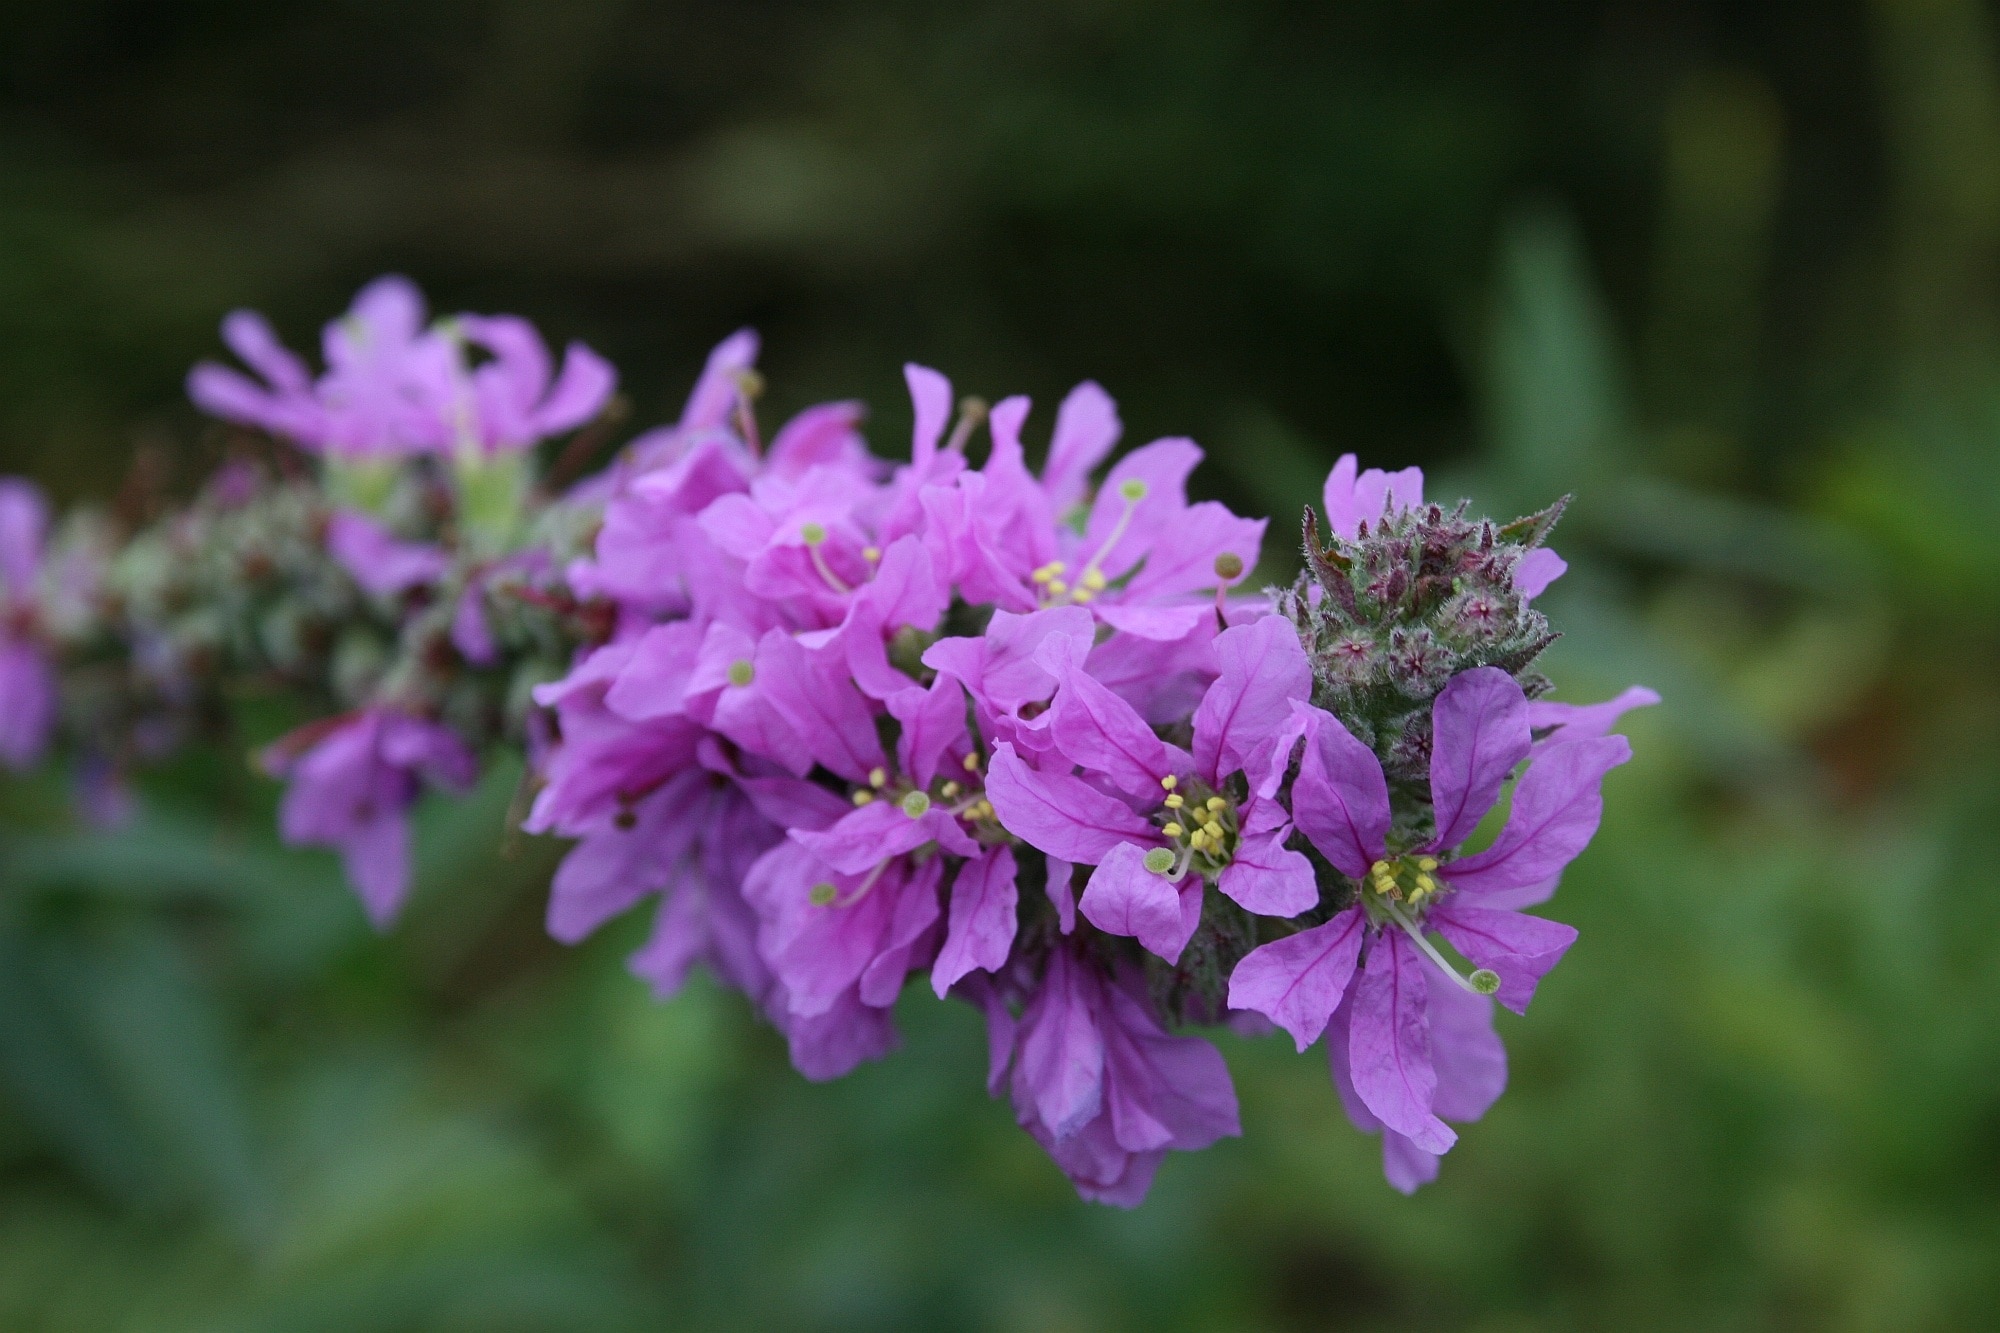 close up view of purple petal flowers